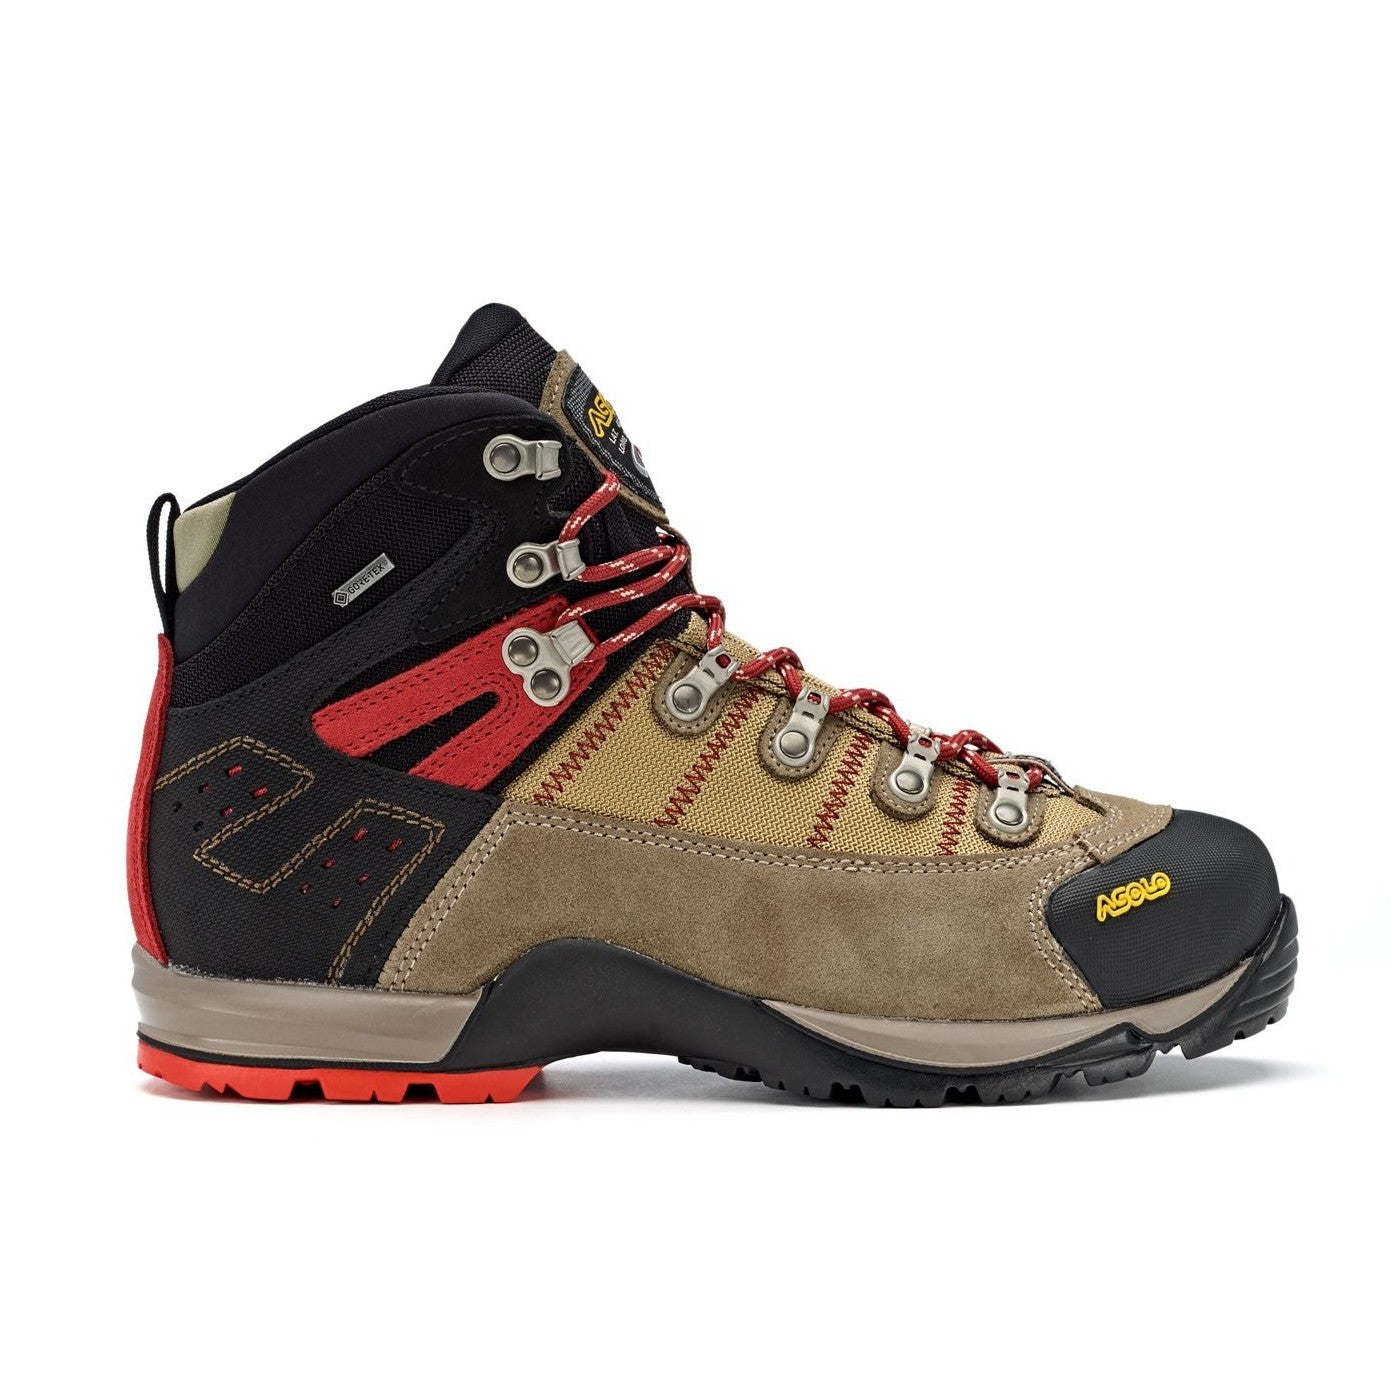 Asolo Men's Fugitive GTX Hiking Boots